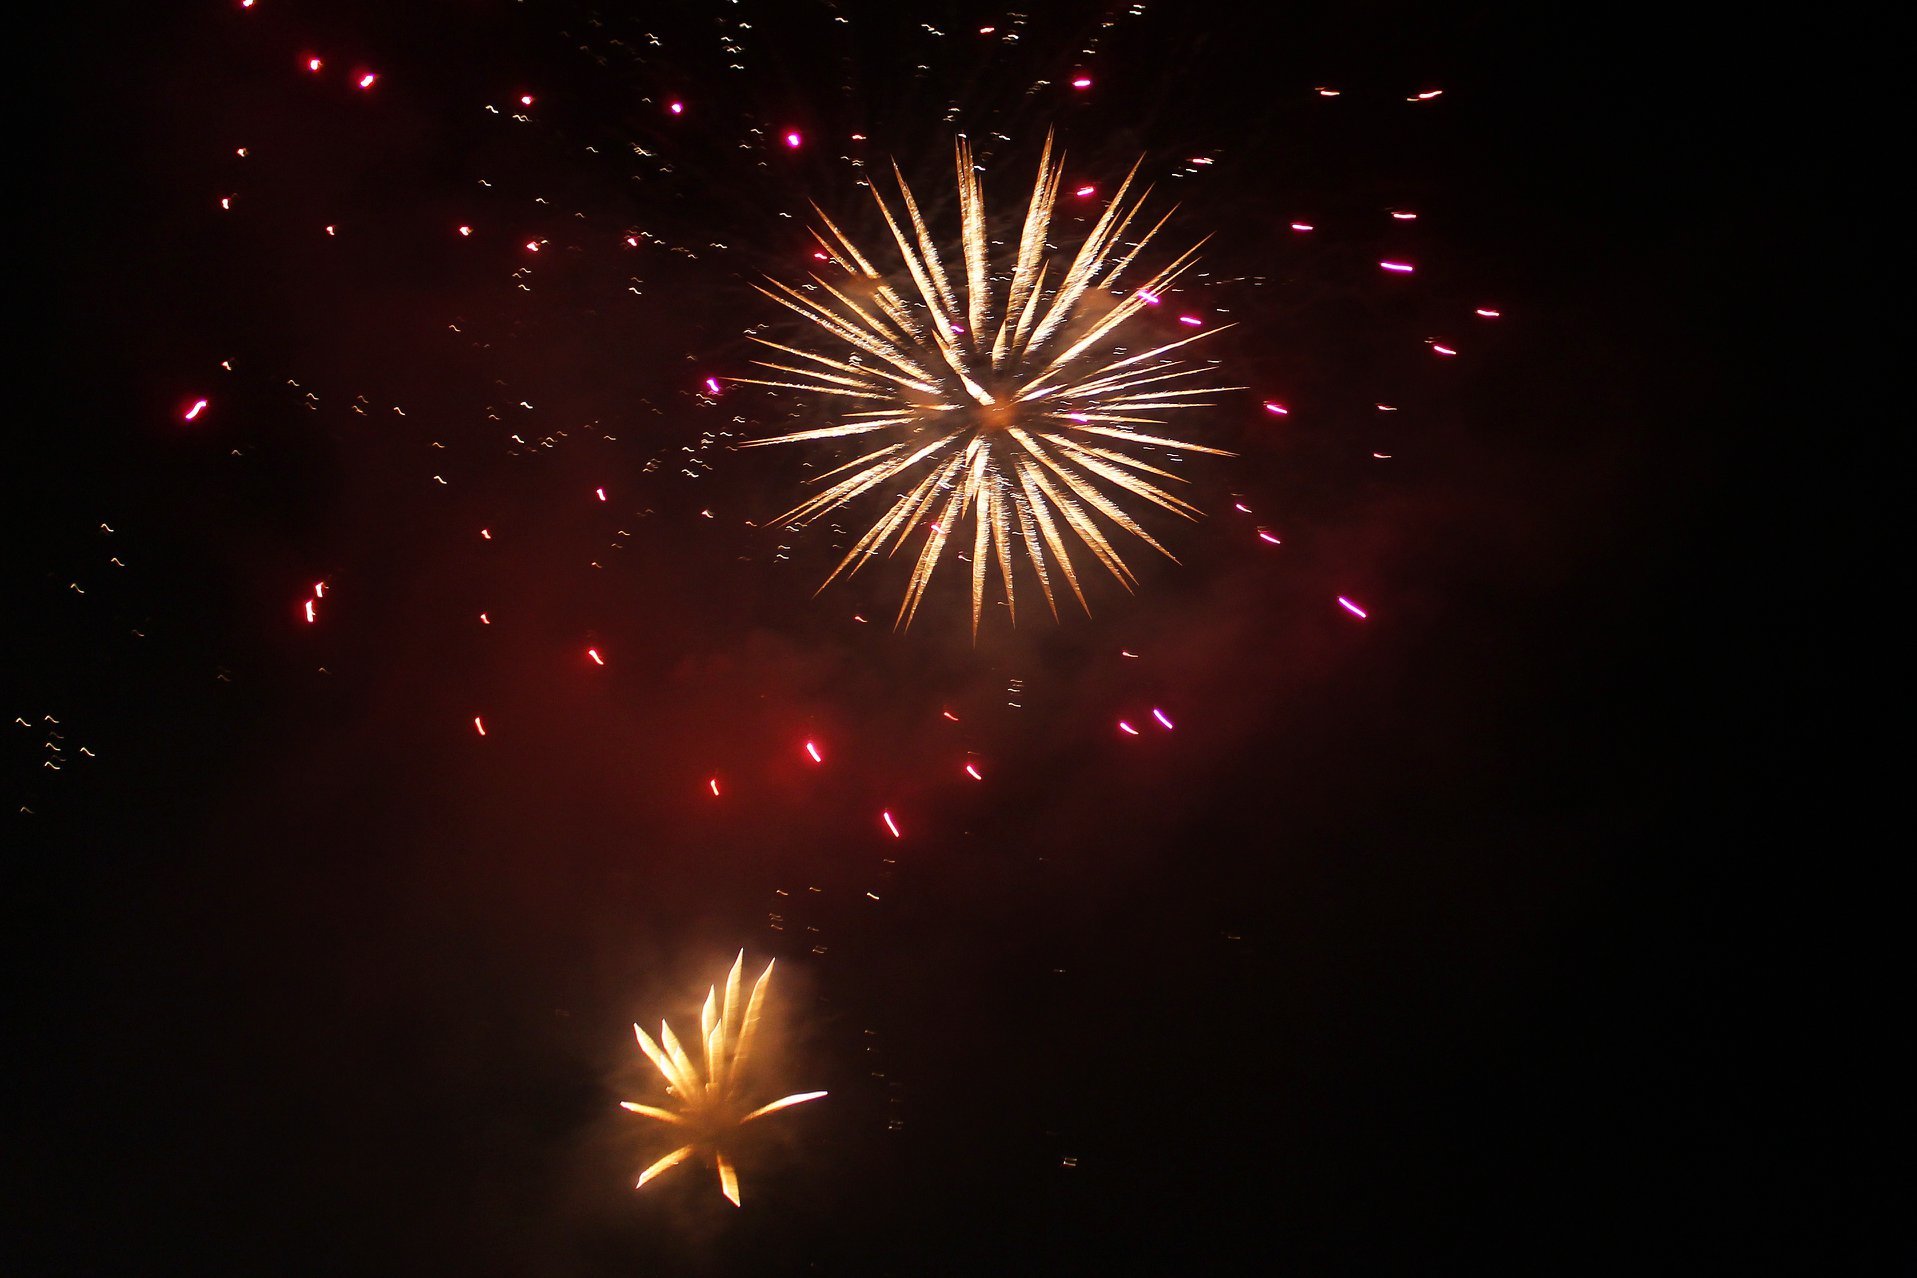 Musselburgh fireworks. Image Angus Bathgate